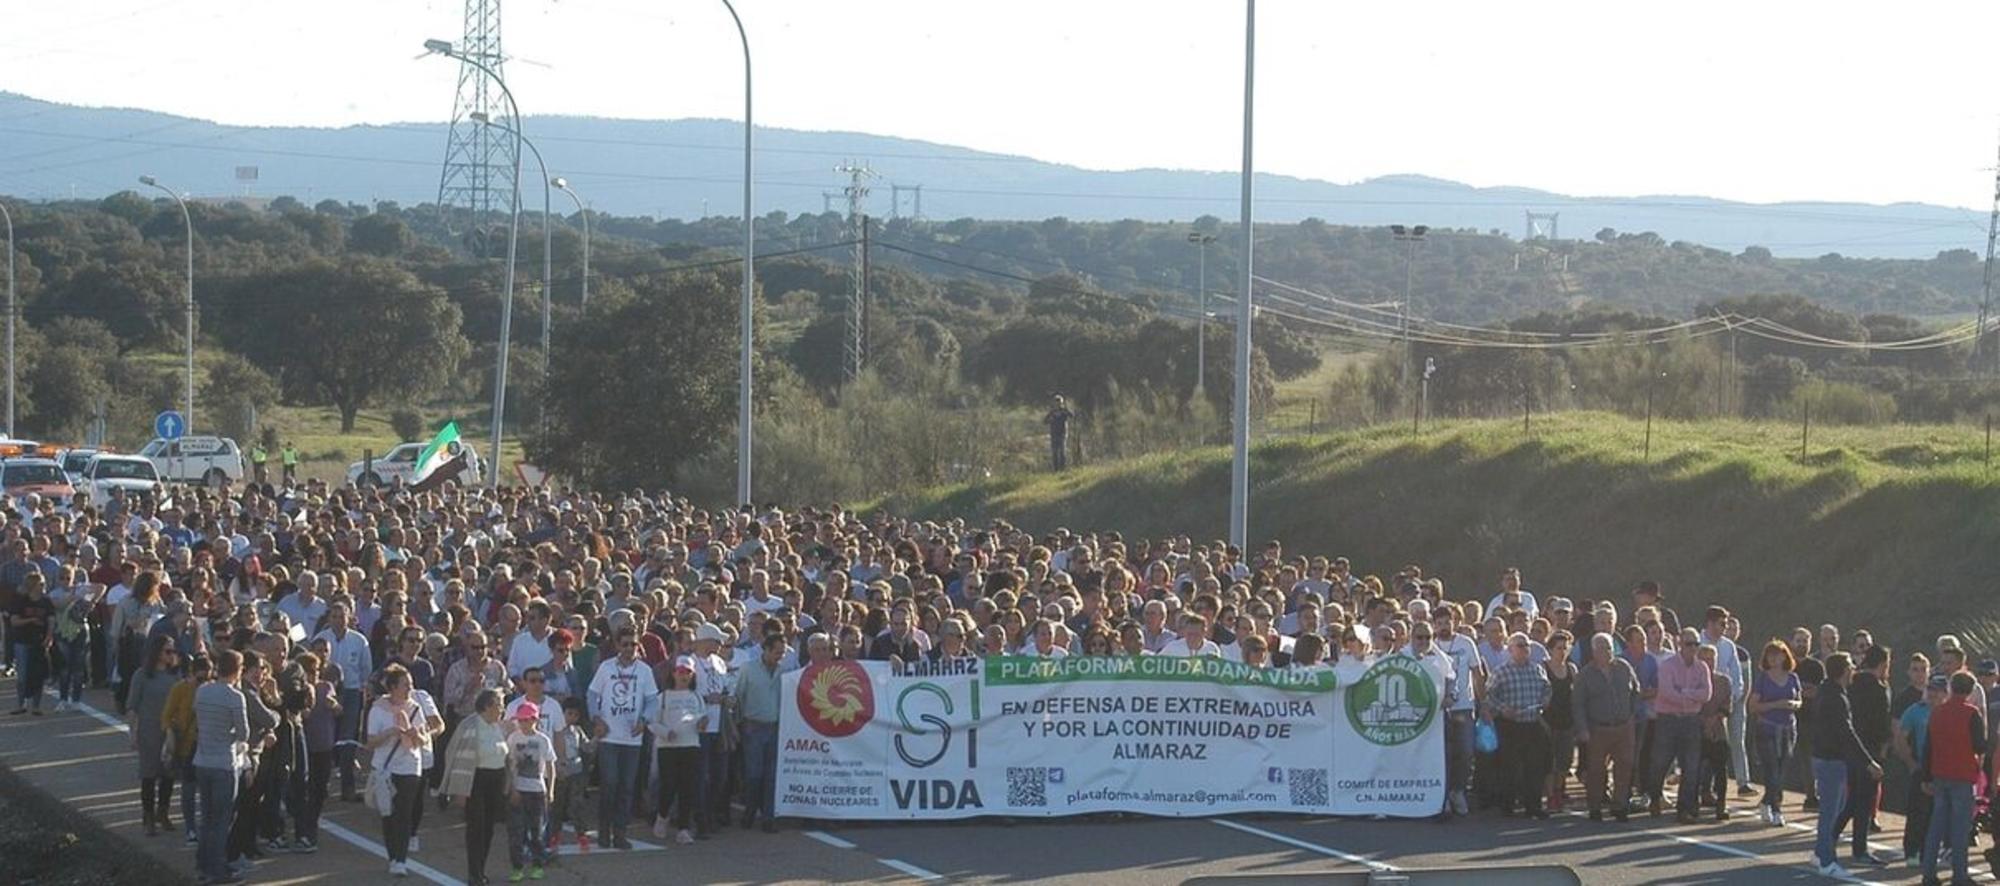 Manifestación pro nuclear en Almaraz